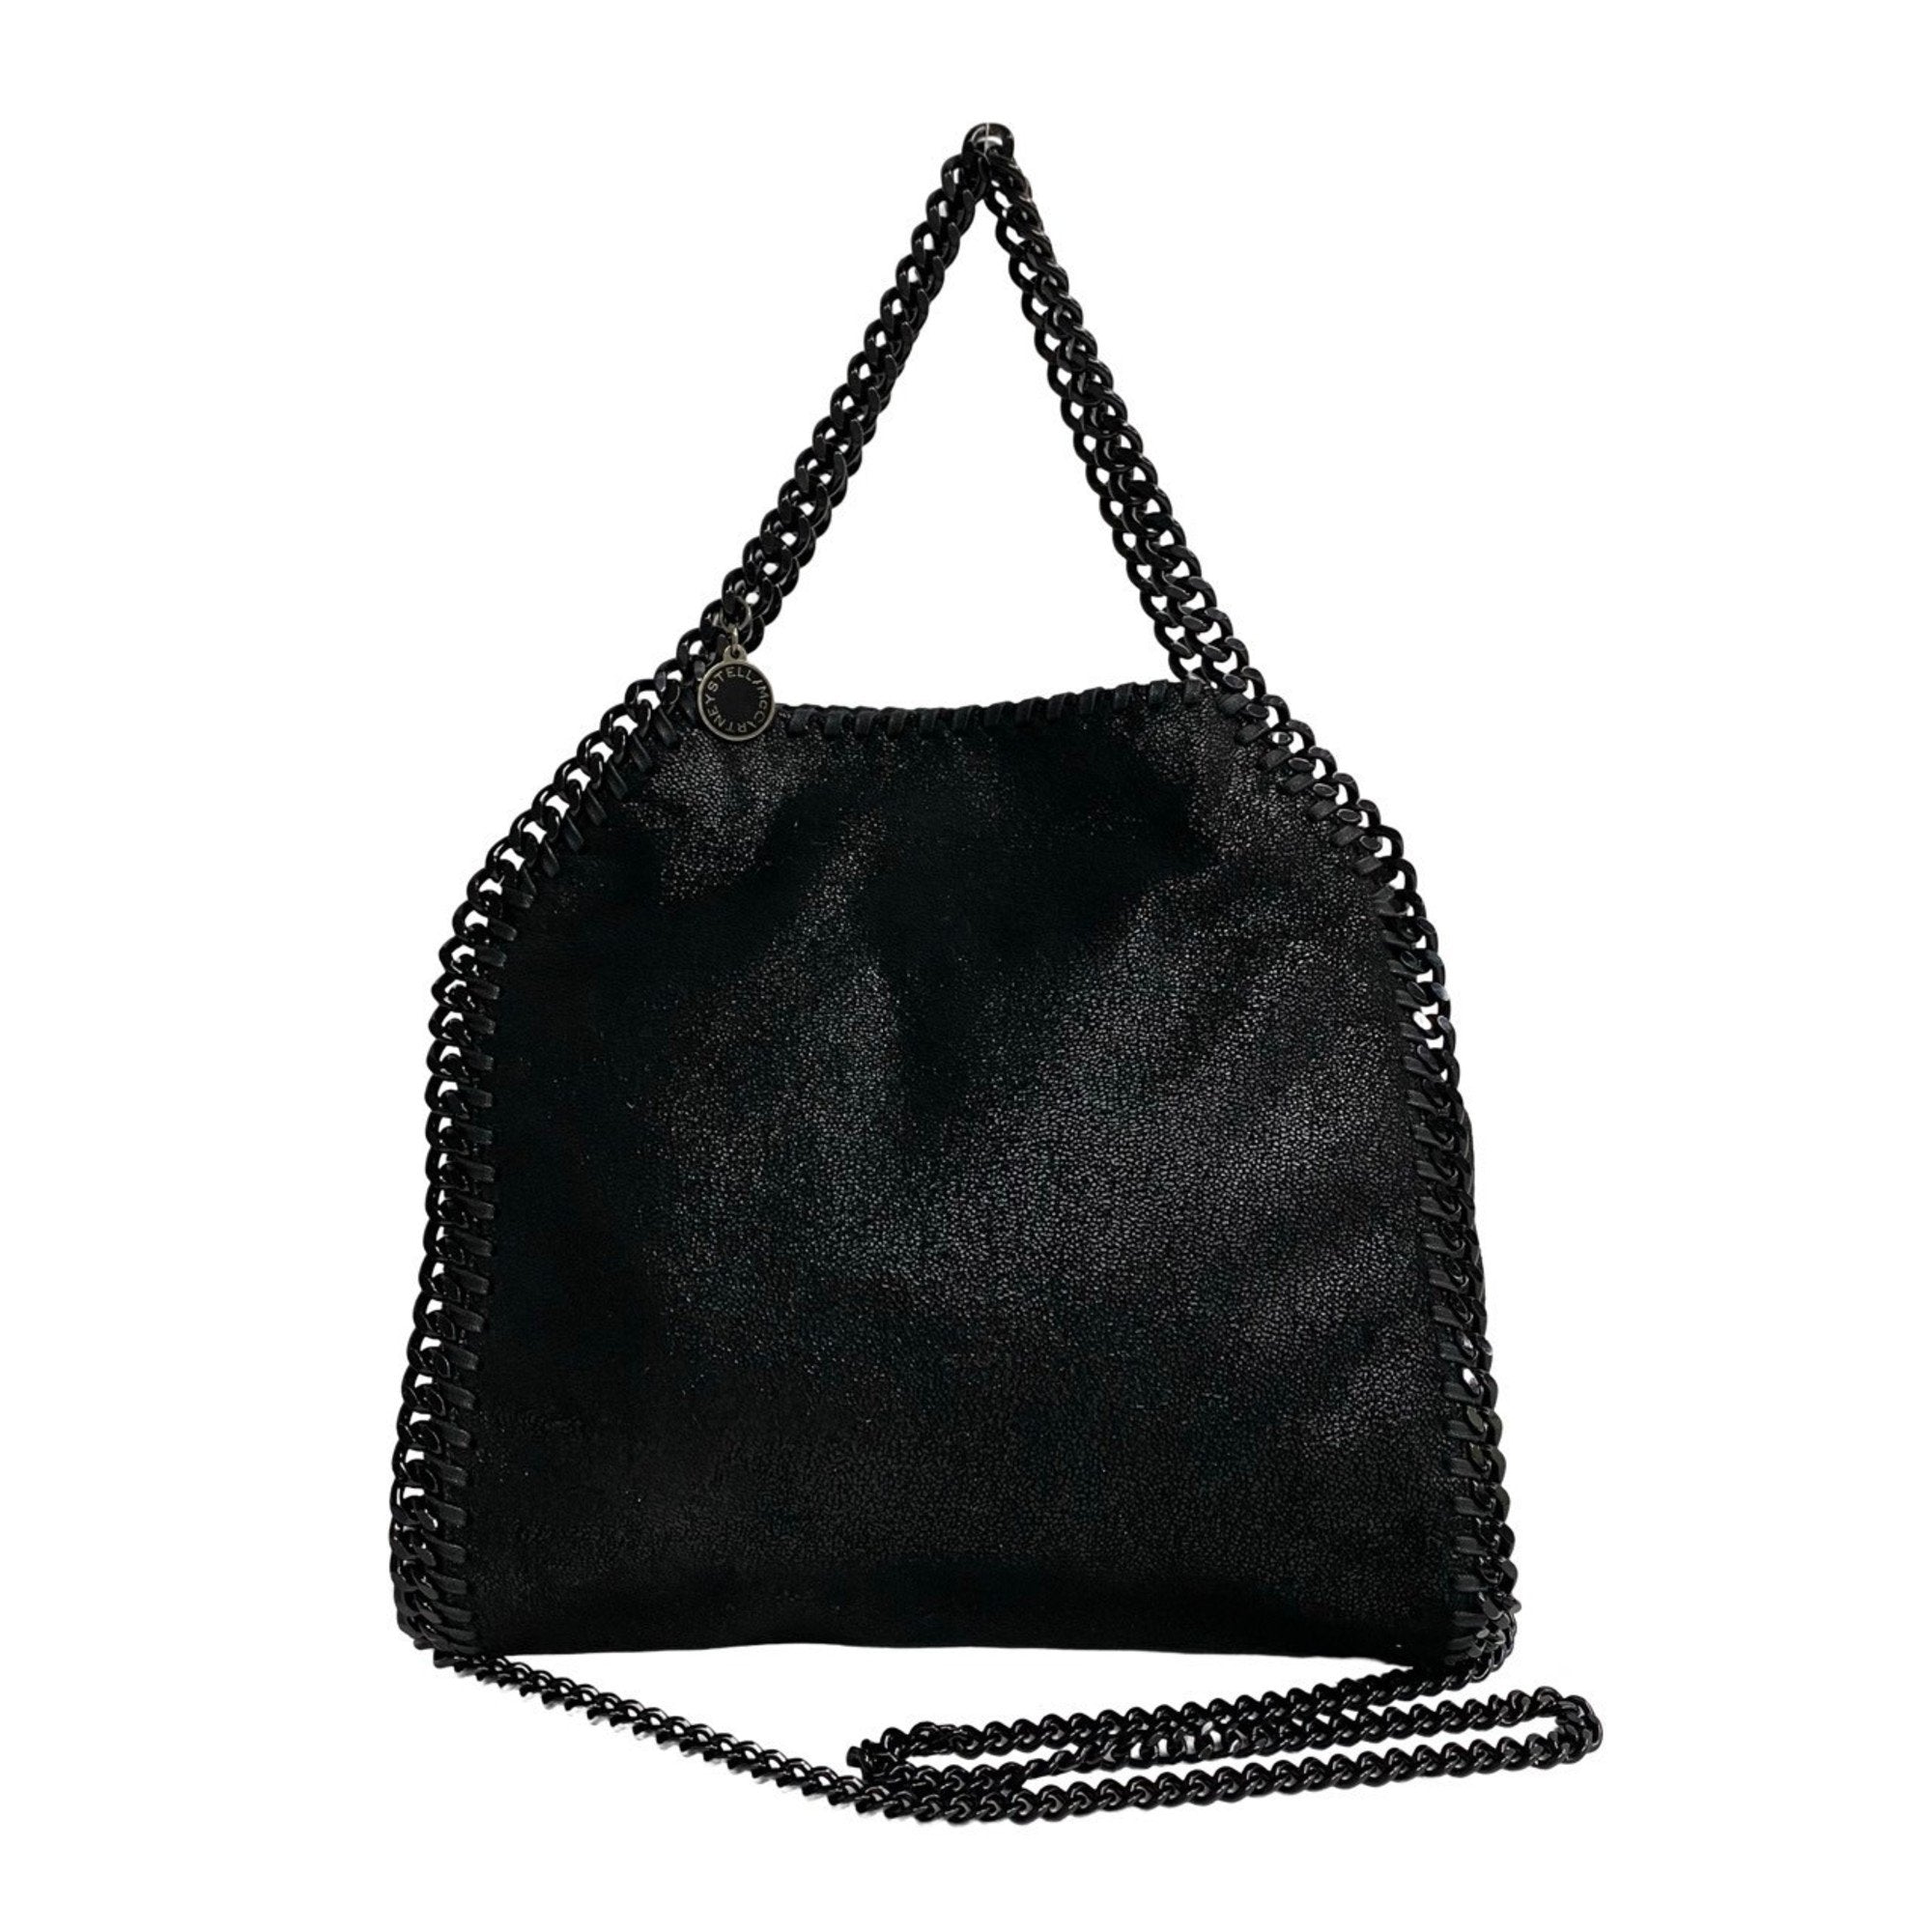 Falabella Leather Chain 2way Handbag Shoulder Bag Black 77279